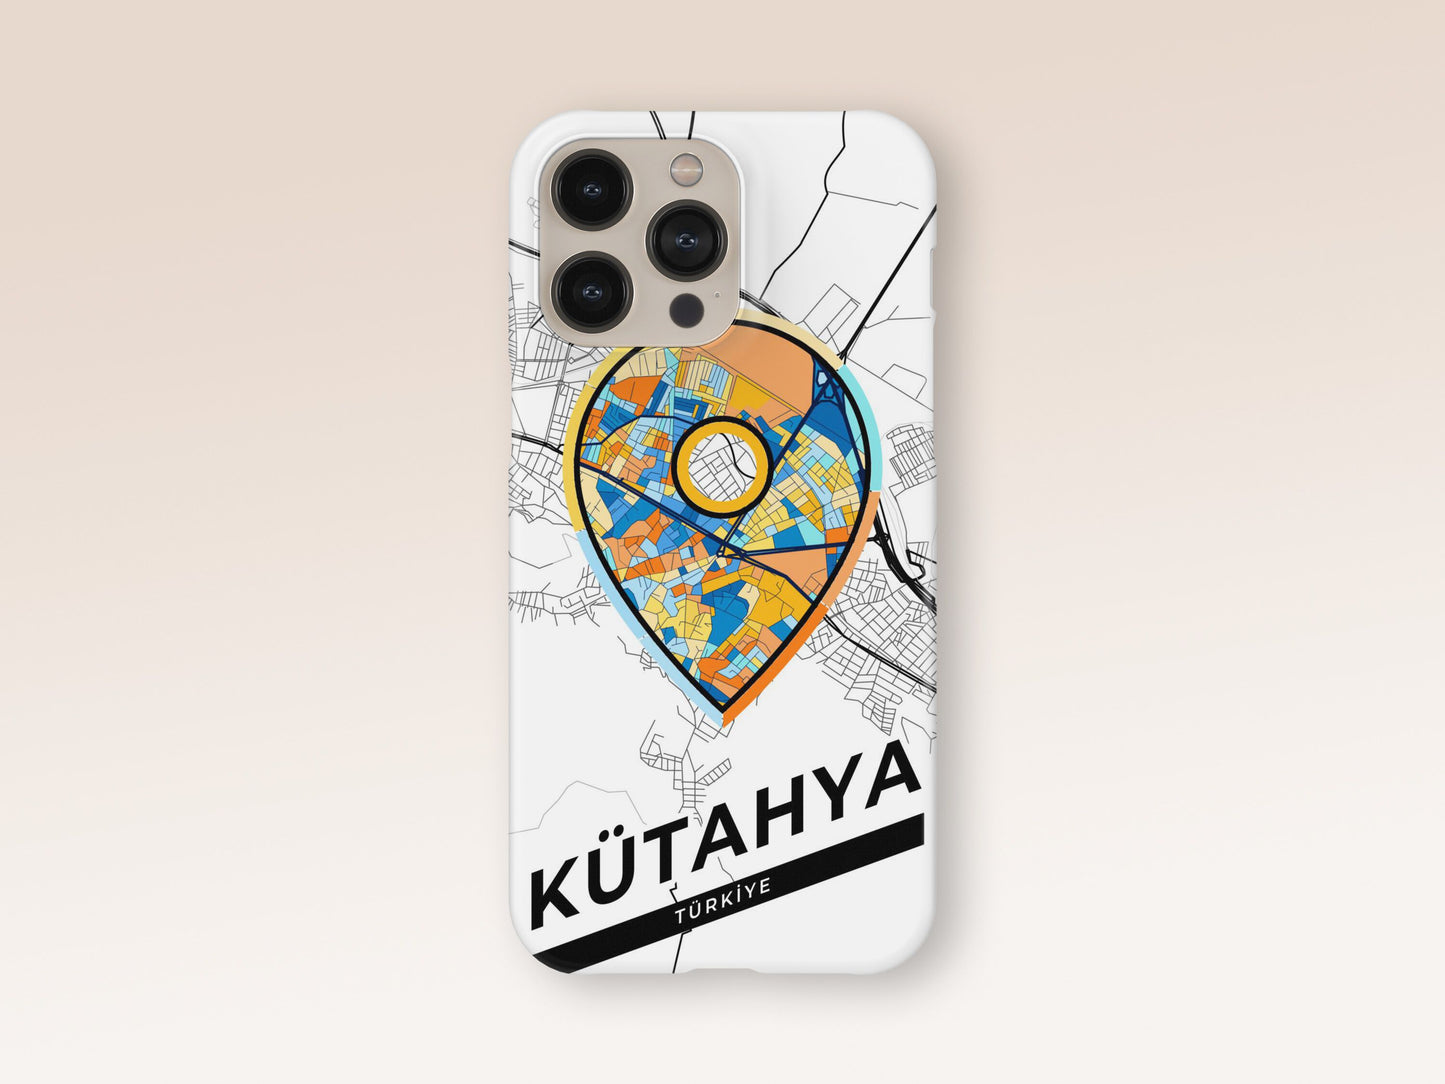 Kütahya Turkey slim phone case with colorful icon. Birthday, wedding or housewarming gift. Couple match cases. 1